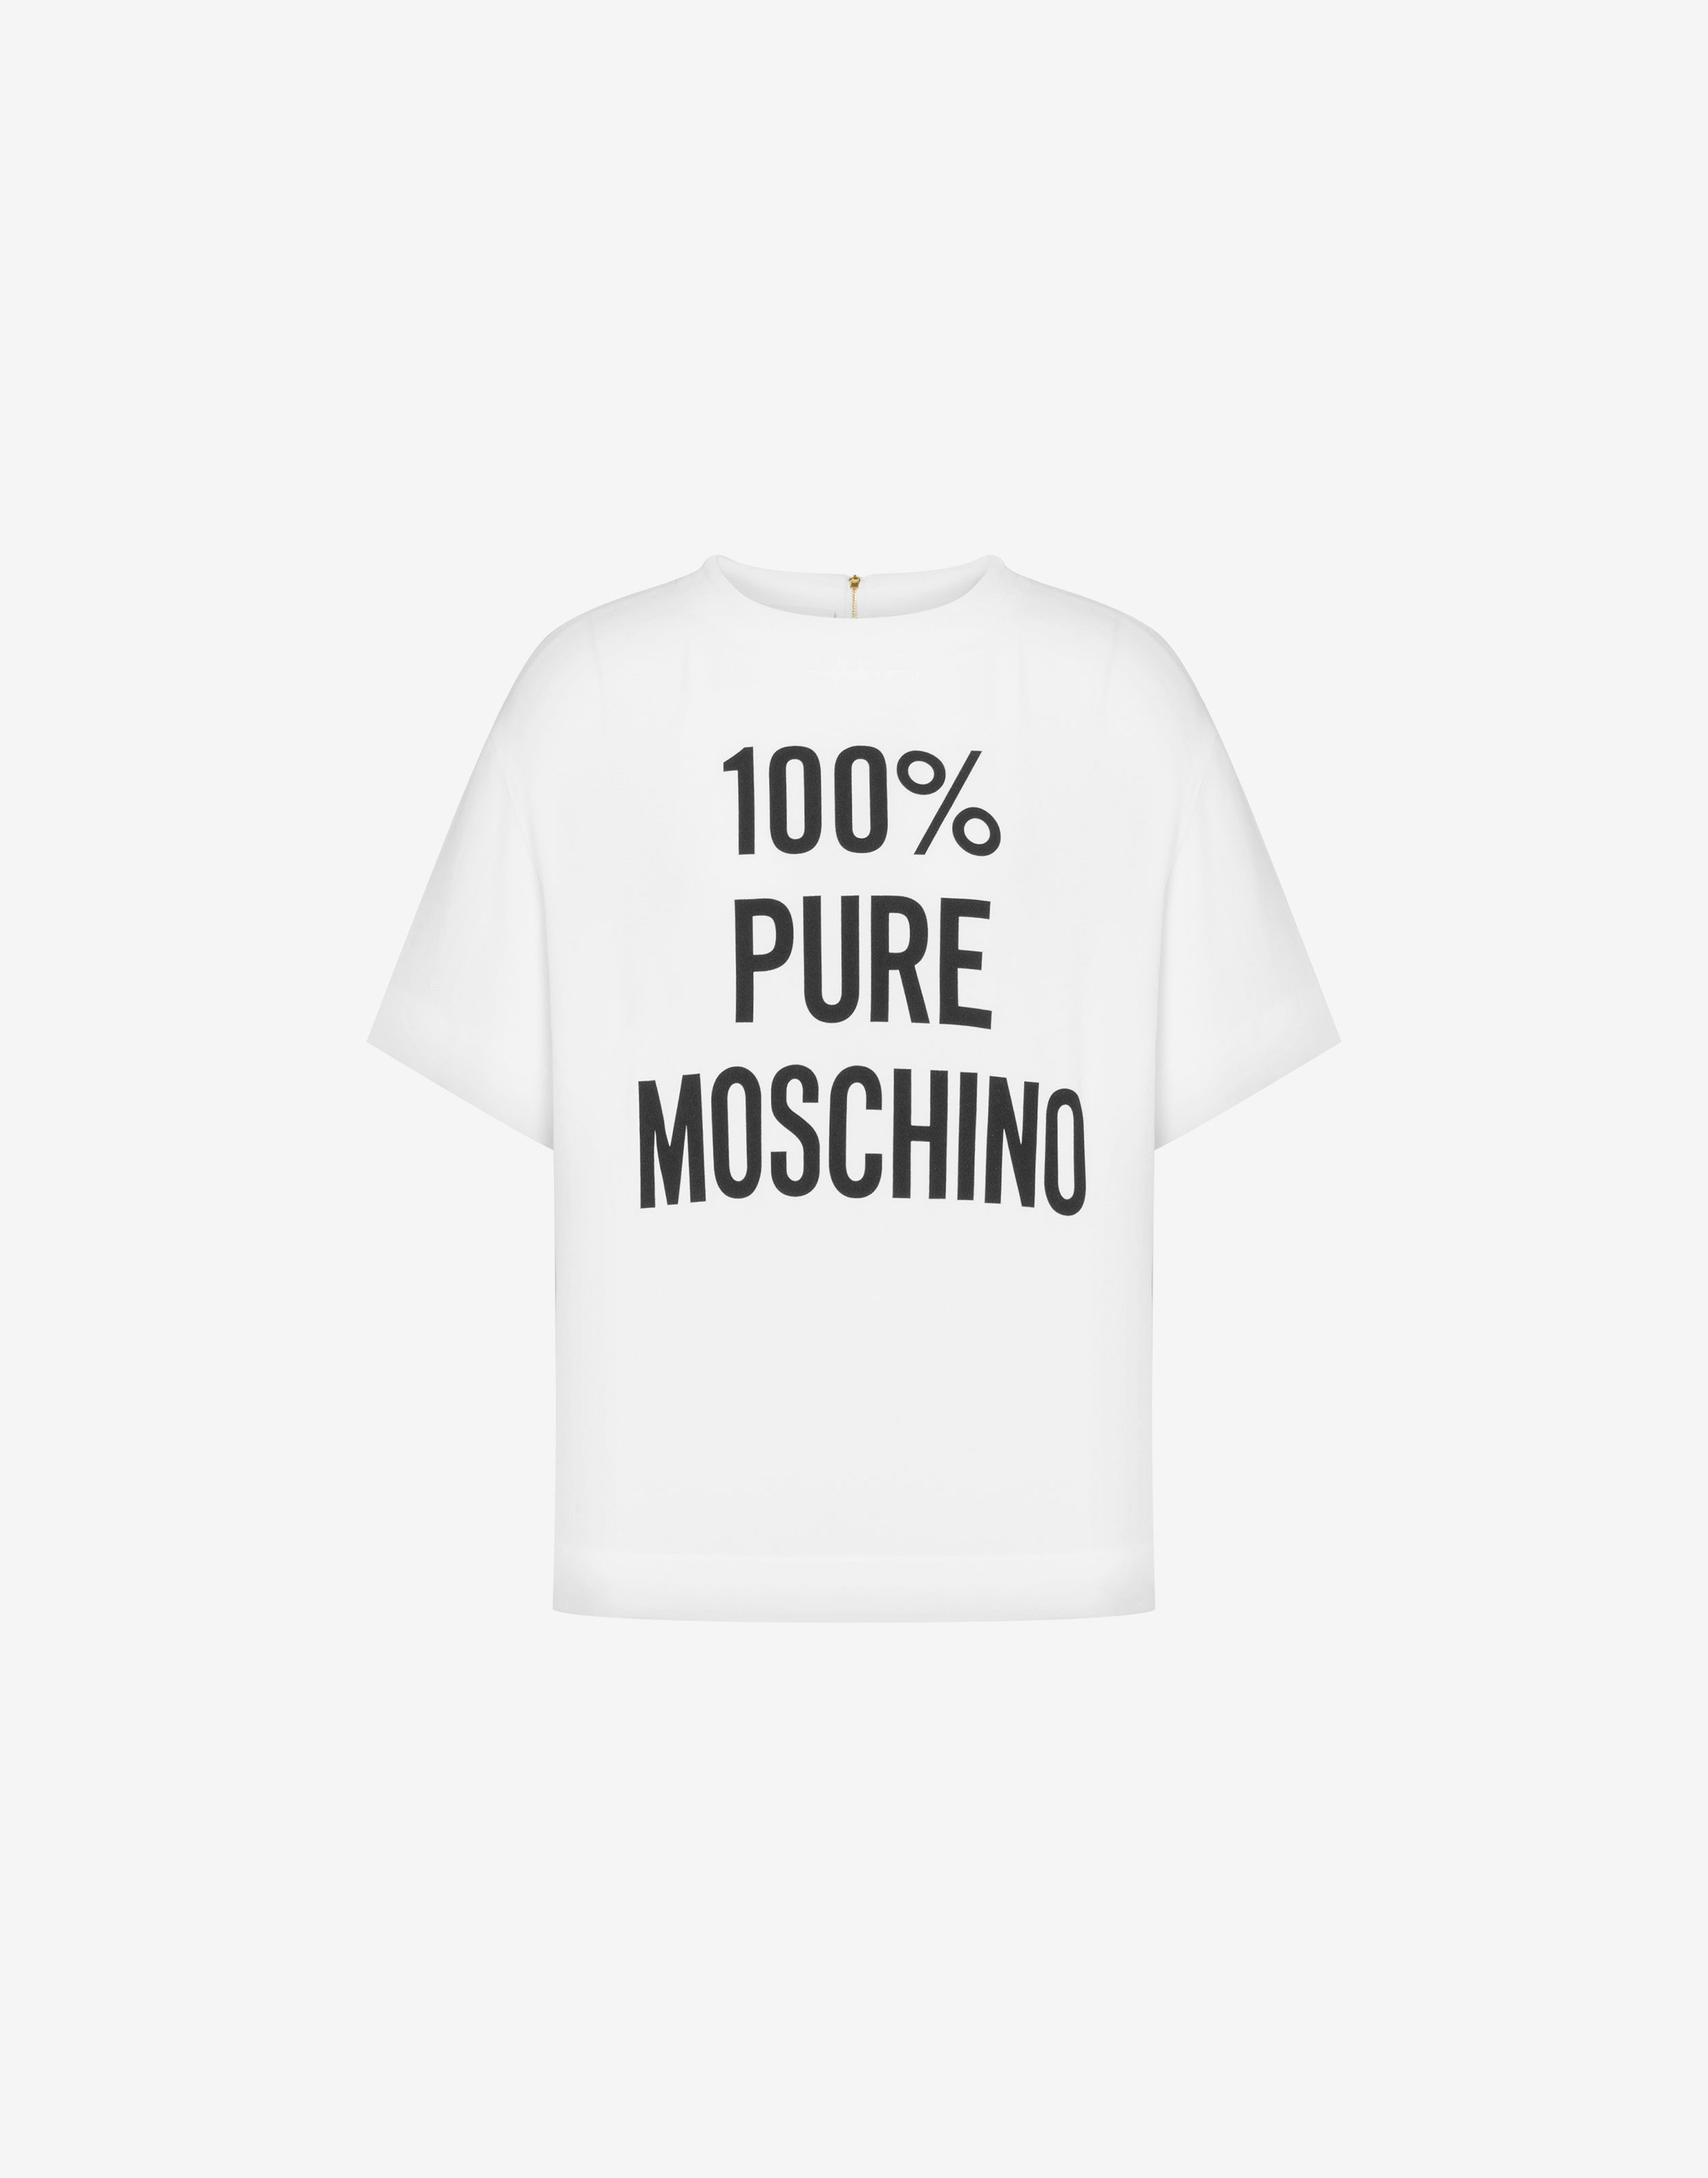 T-shirt aus envers-satin 100% pure moschino print